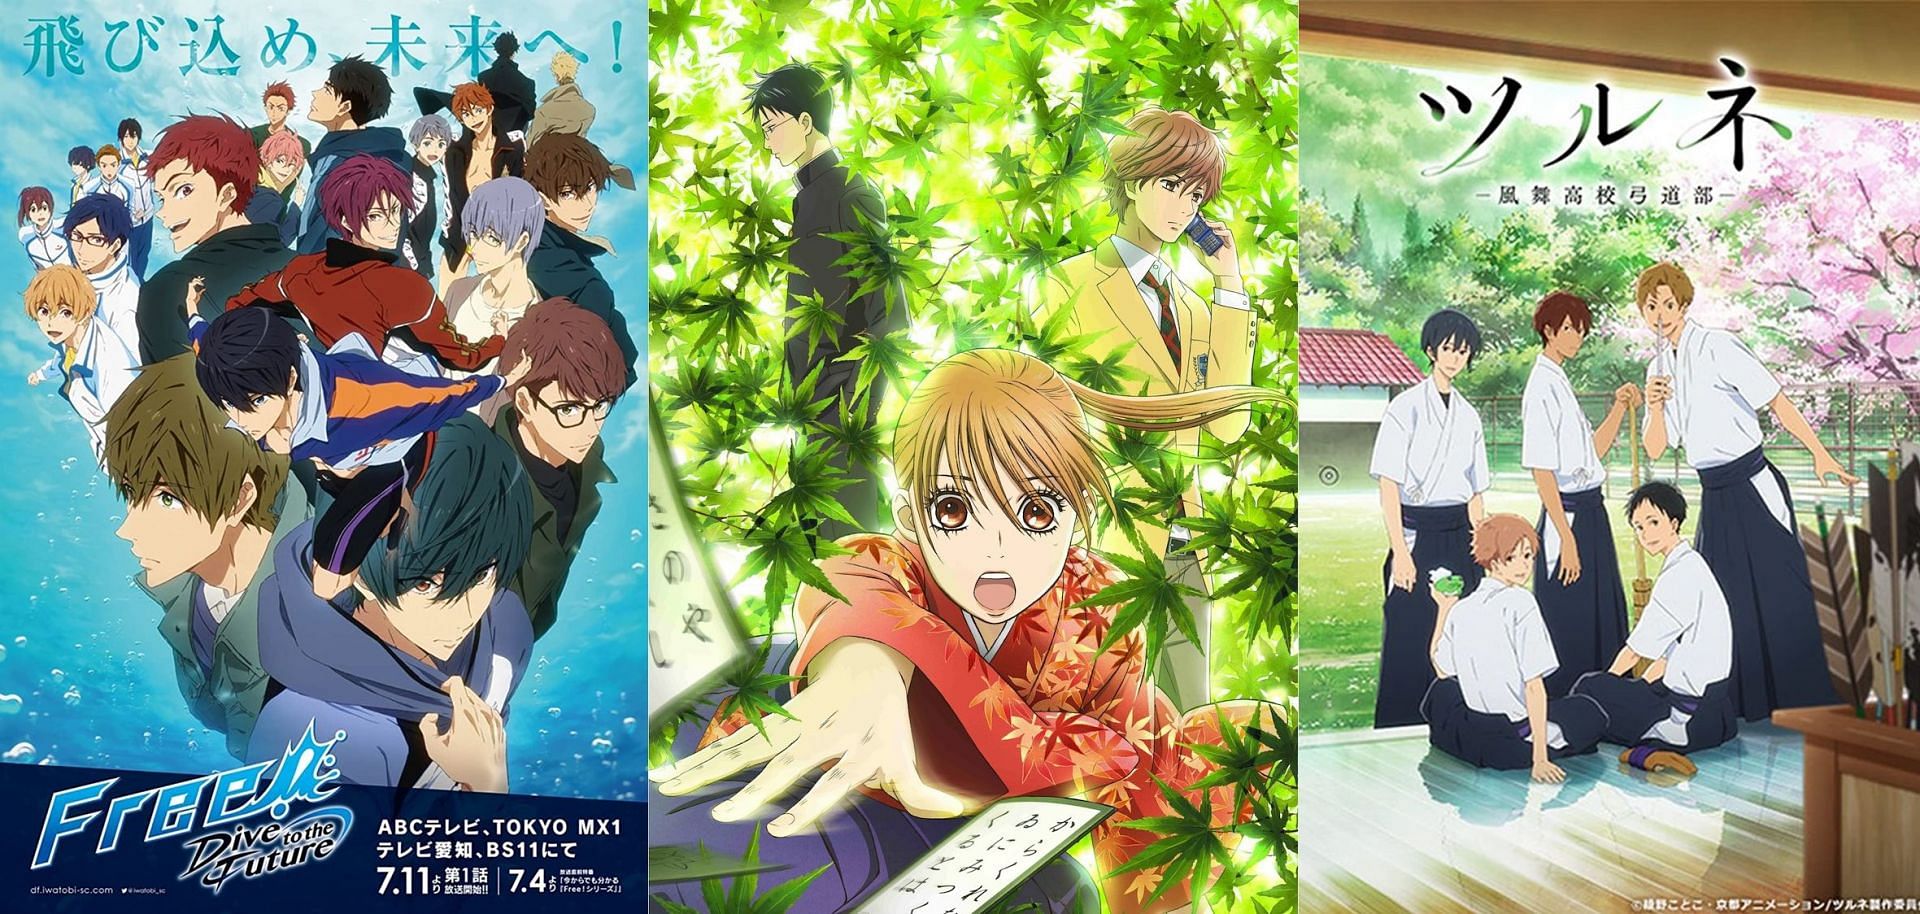 Free!, Chihayafuru, Tsurune anime posters (Image via Sportskeeda)